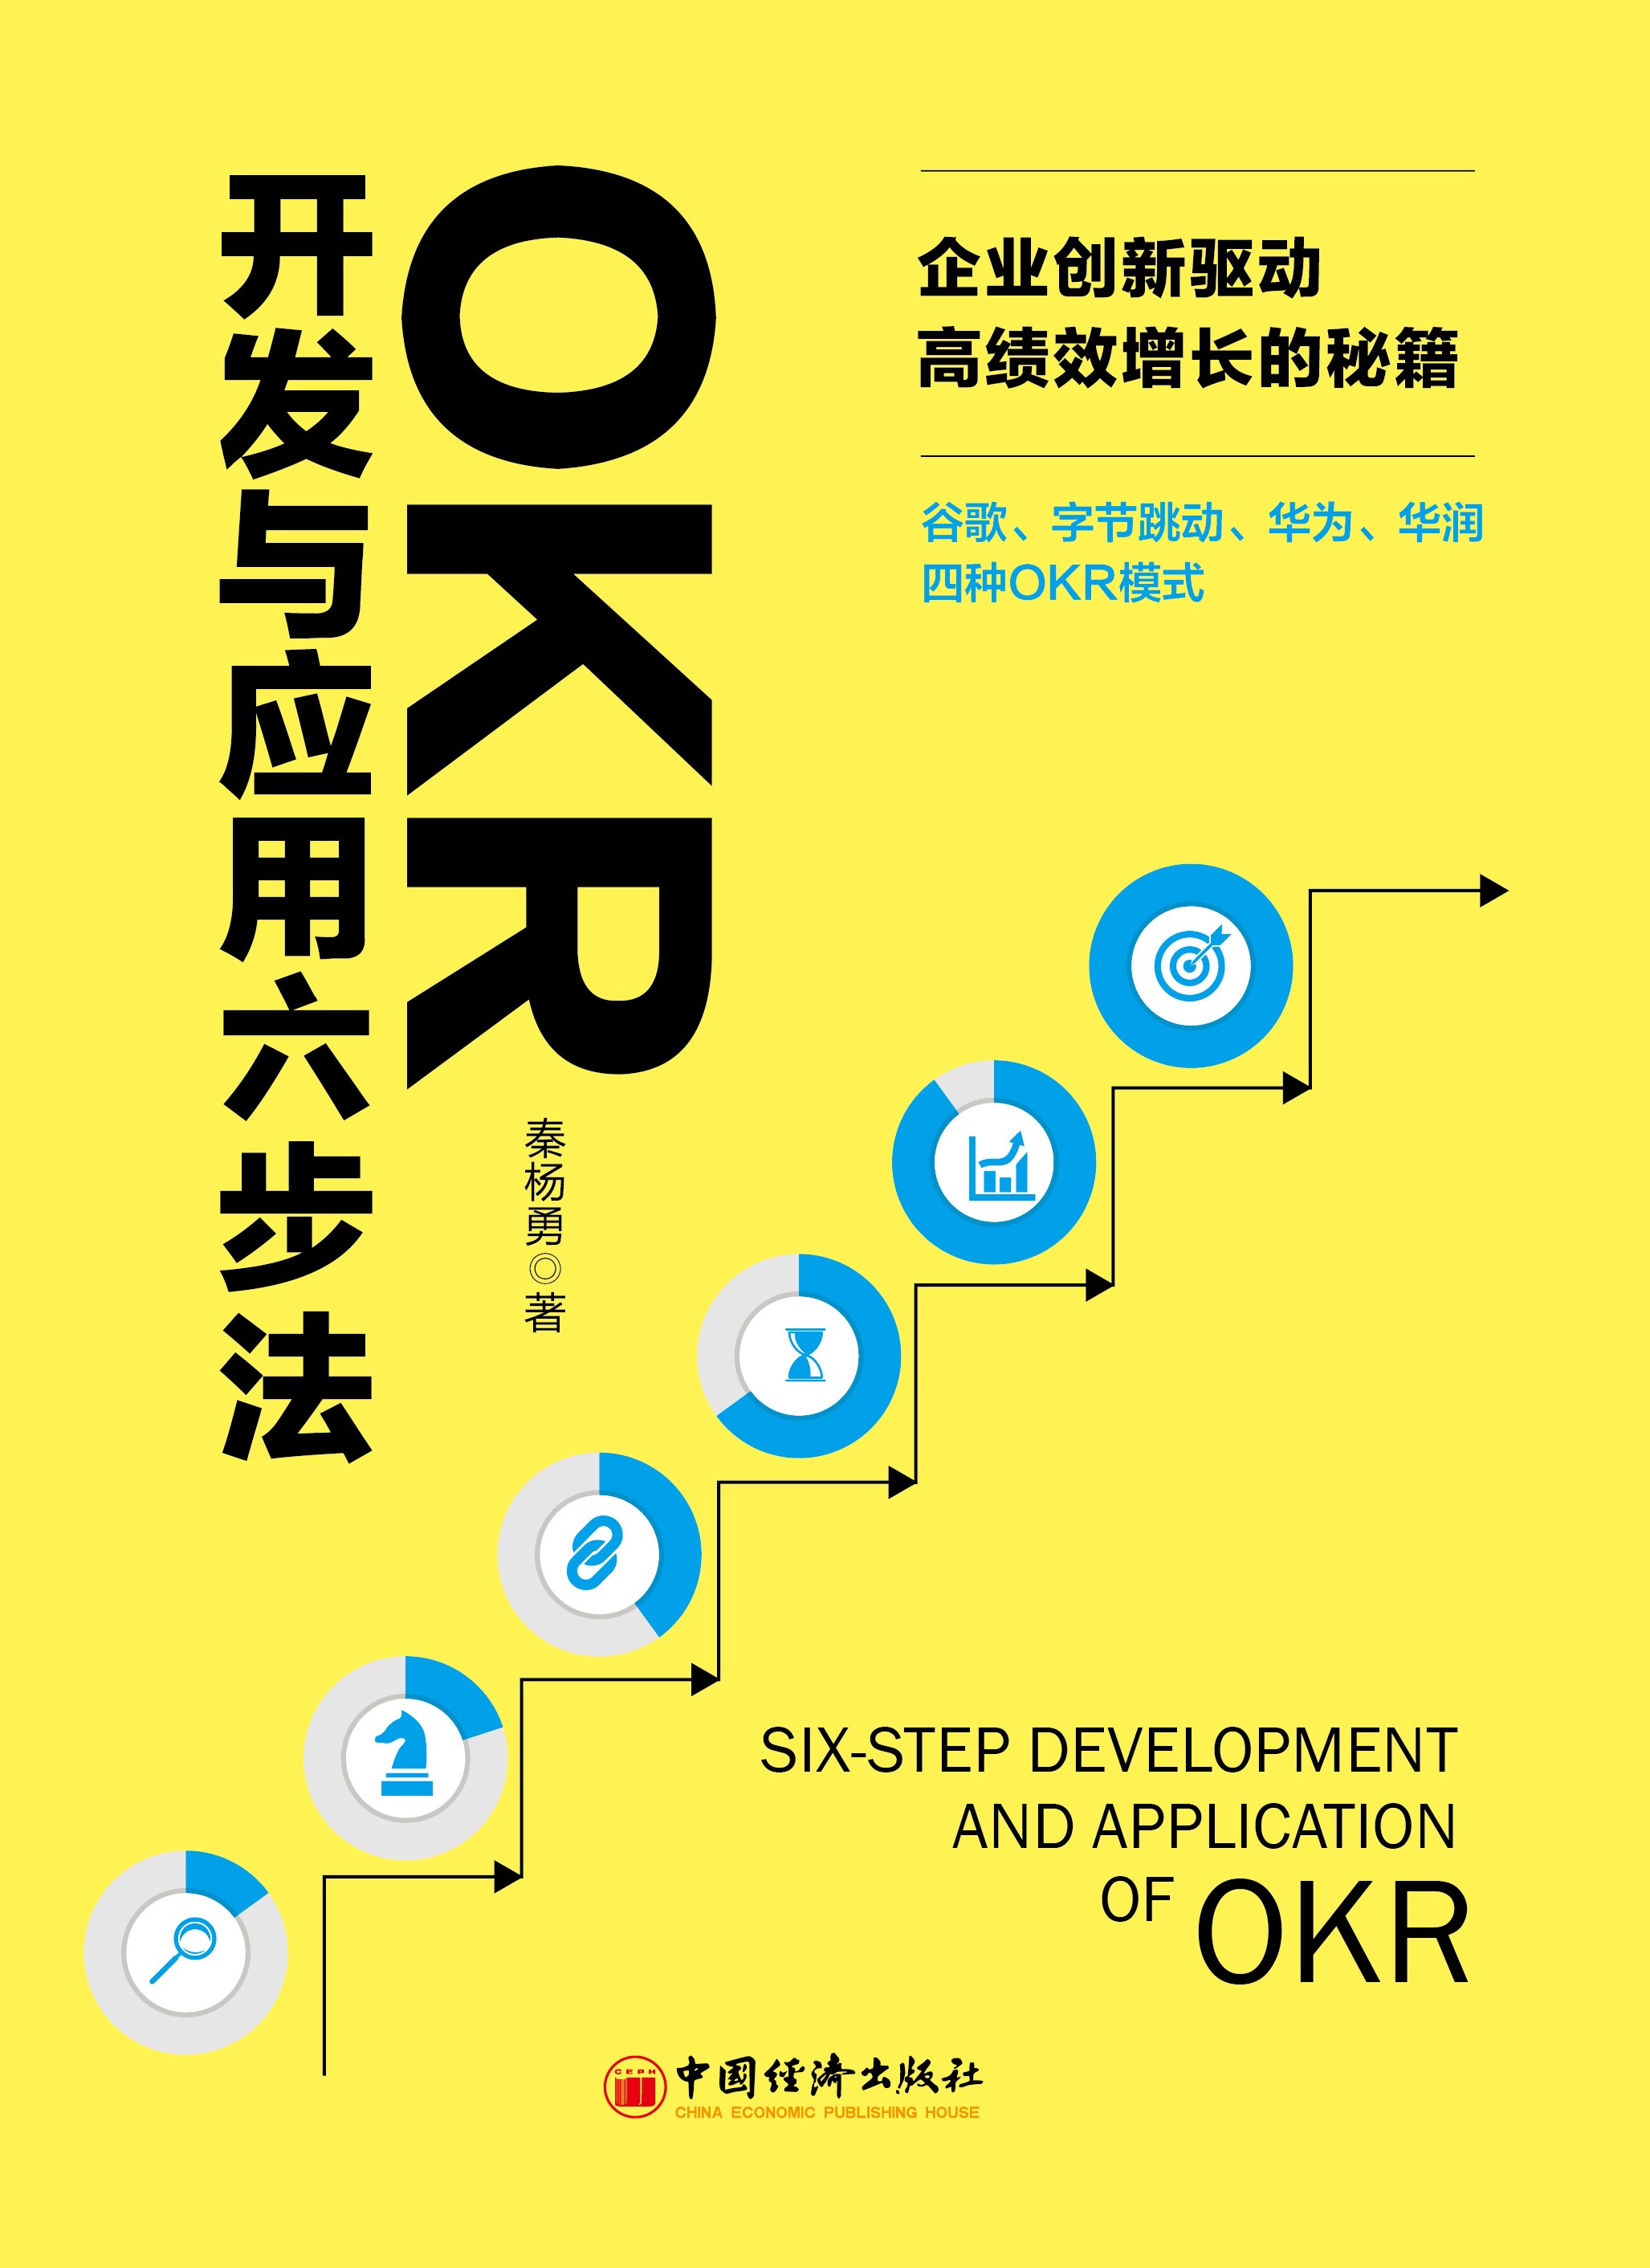 《OKR开发与应用六步法》由中国经济出版社出版